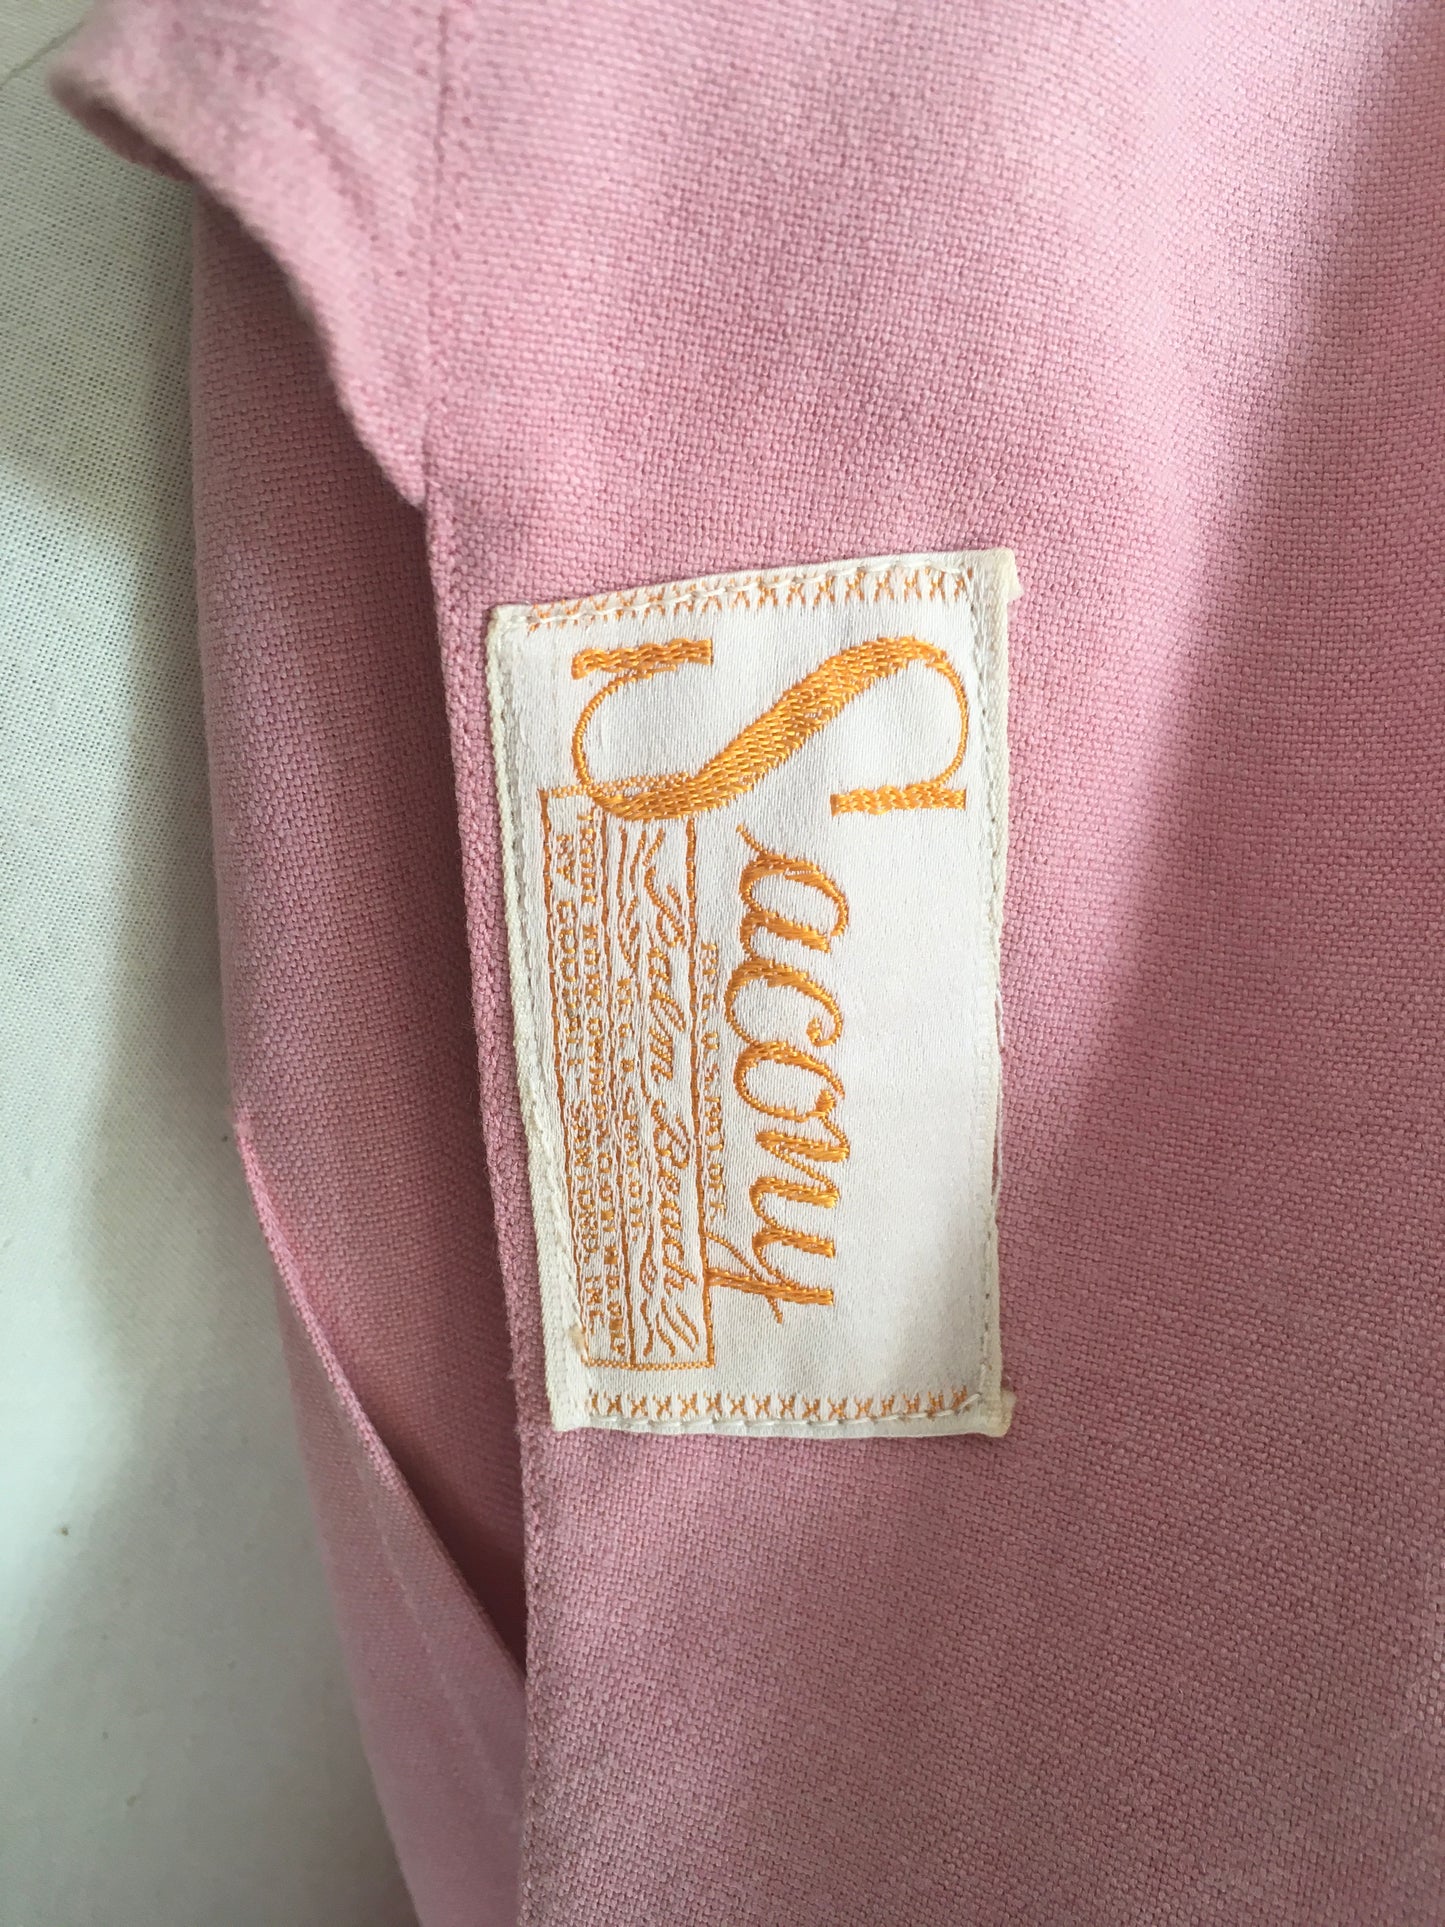 Original 1940’s Lightweight Summer Jacket In Blush - ‘ Sacony Palm Beach’ Label